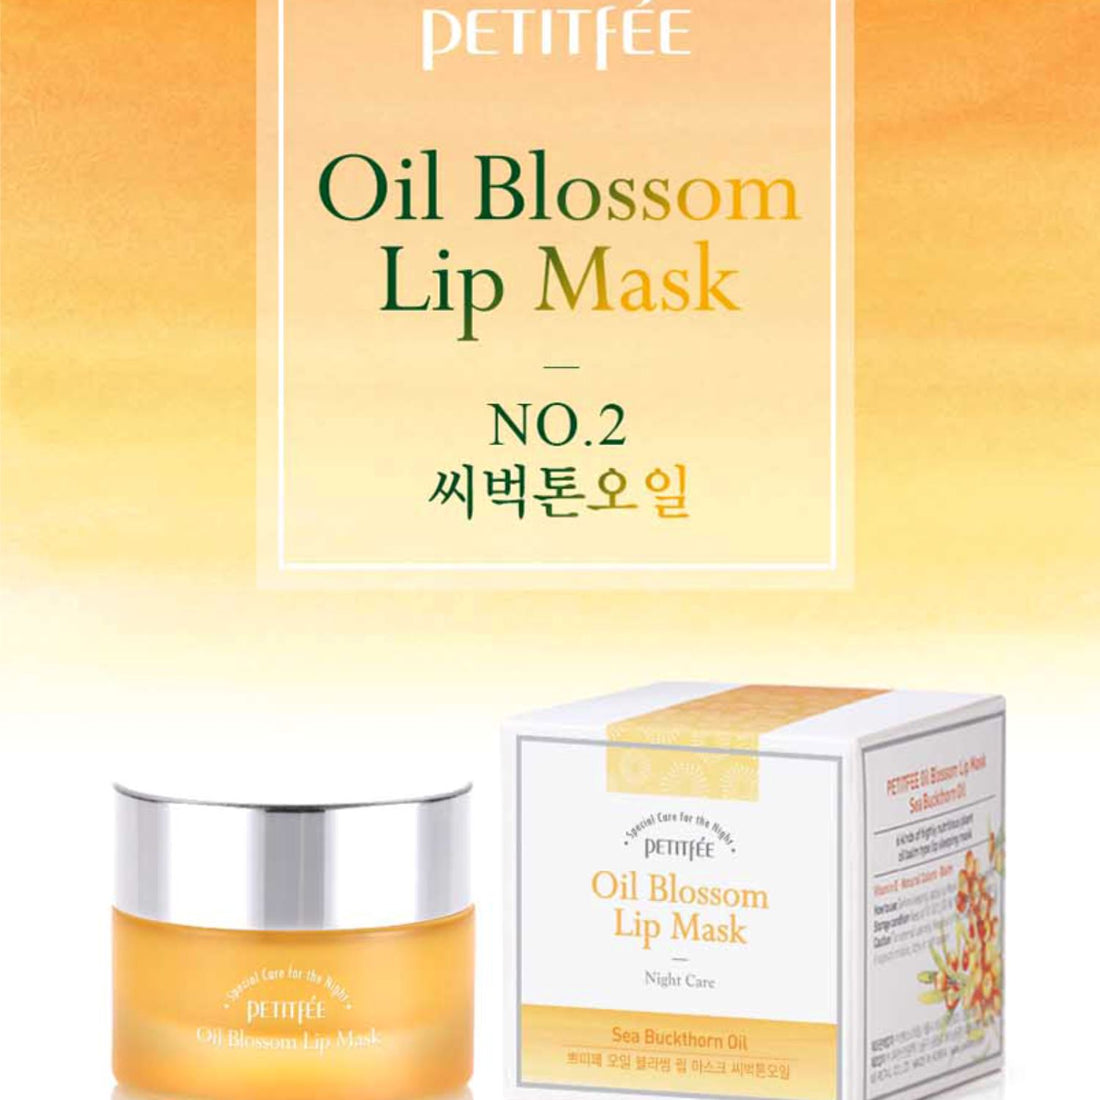 Petitfee Oil Blossom Lip Mask (Sea Buckthorn Oil) 15g Skin Care Petitfee ORION XO Sri Lanka